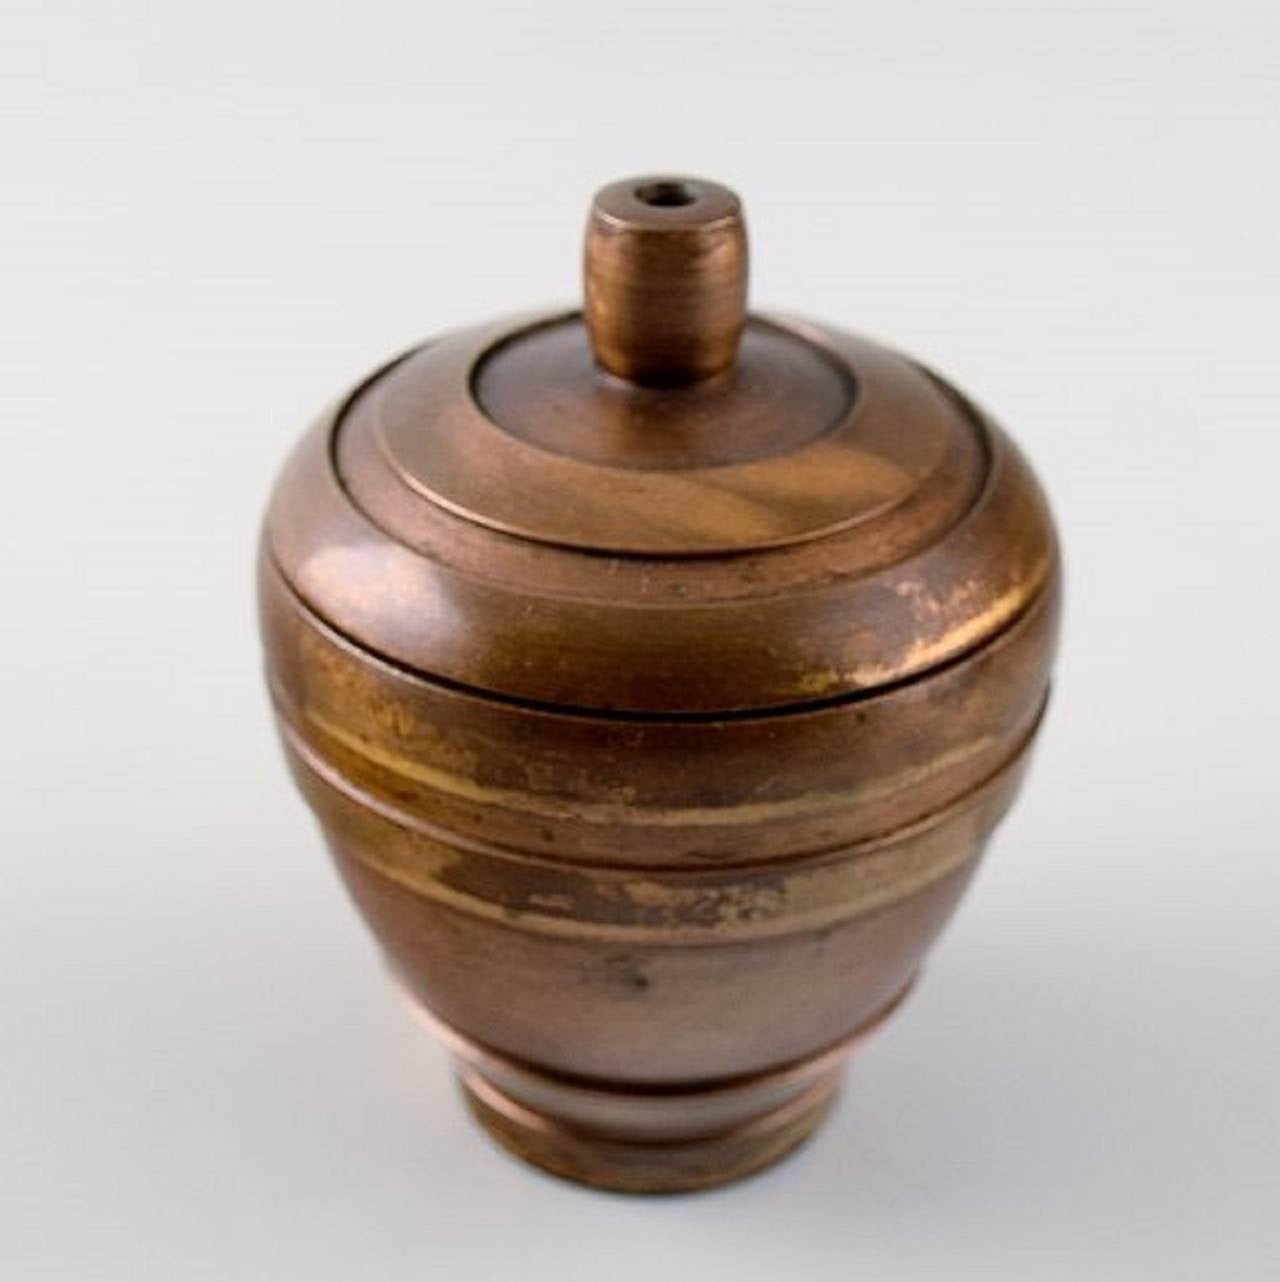 Cawa Art Deco lidded bronze jar, circa 1940.
Danish design.
In very good condition.
Hallmarked.
Measures: 8 cm.